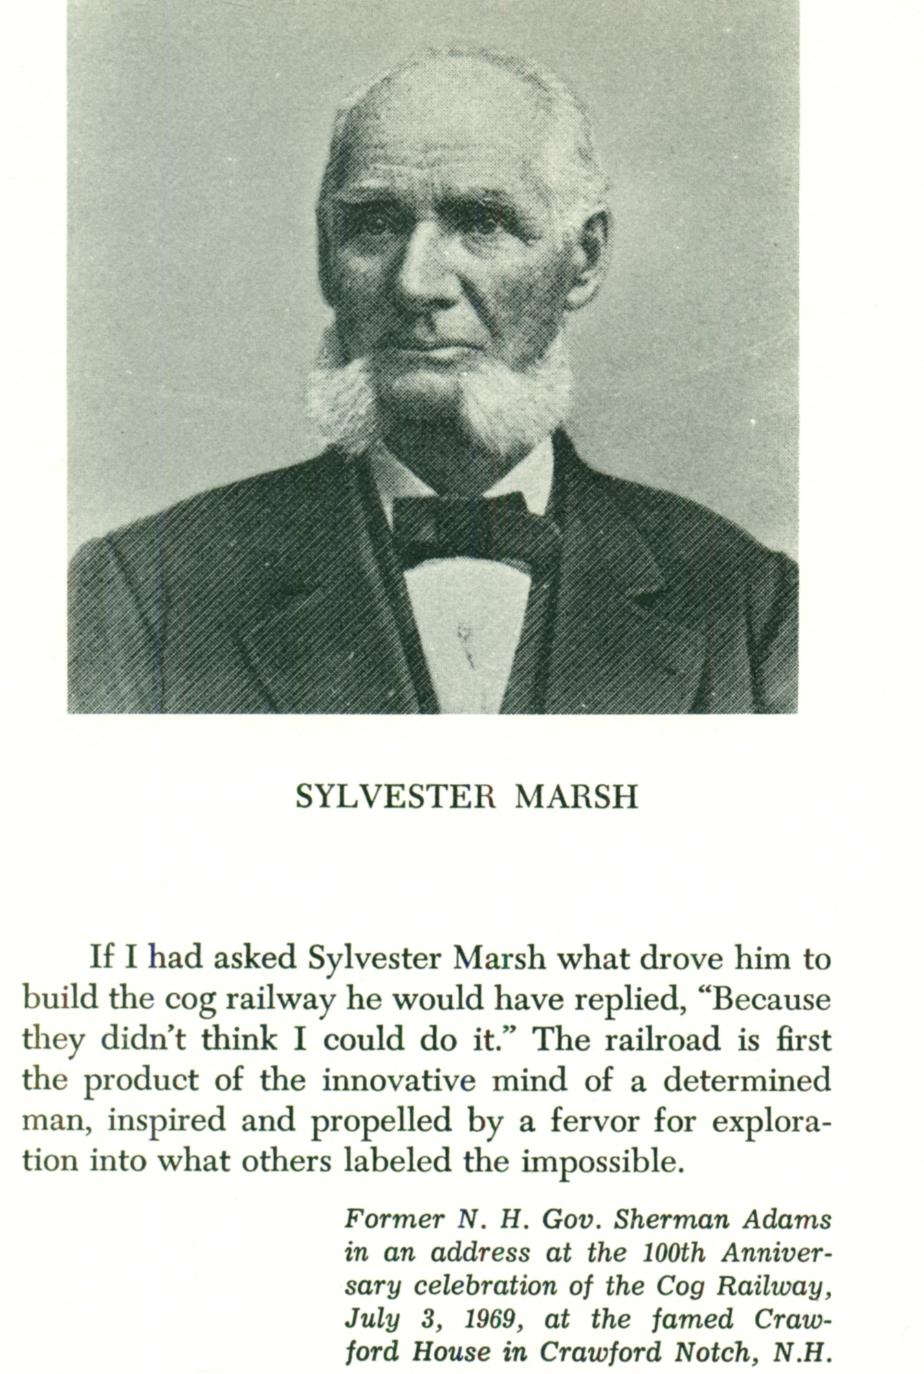 Sylvester Marsh - Originator of the Cog Railway